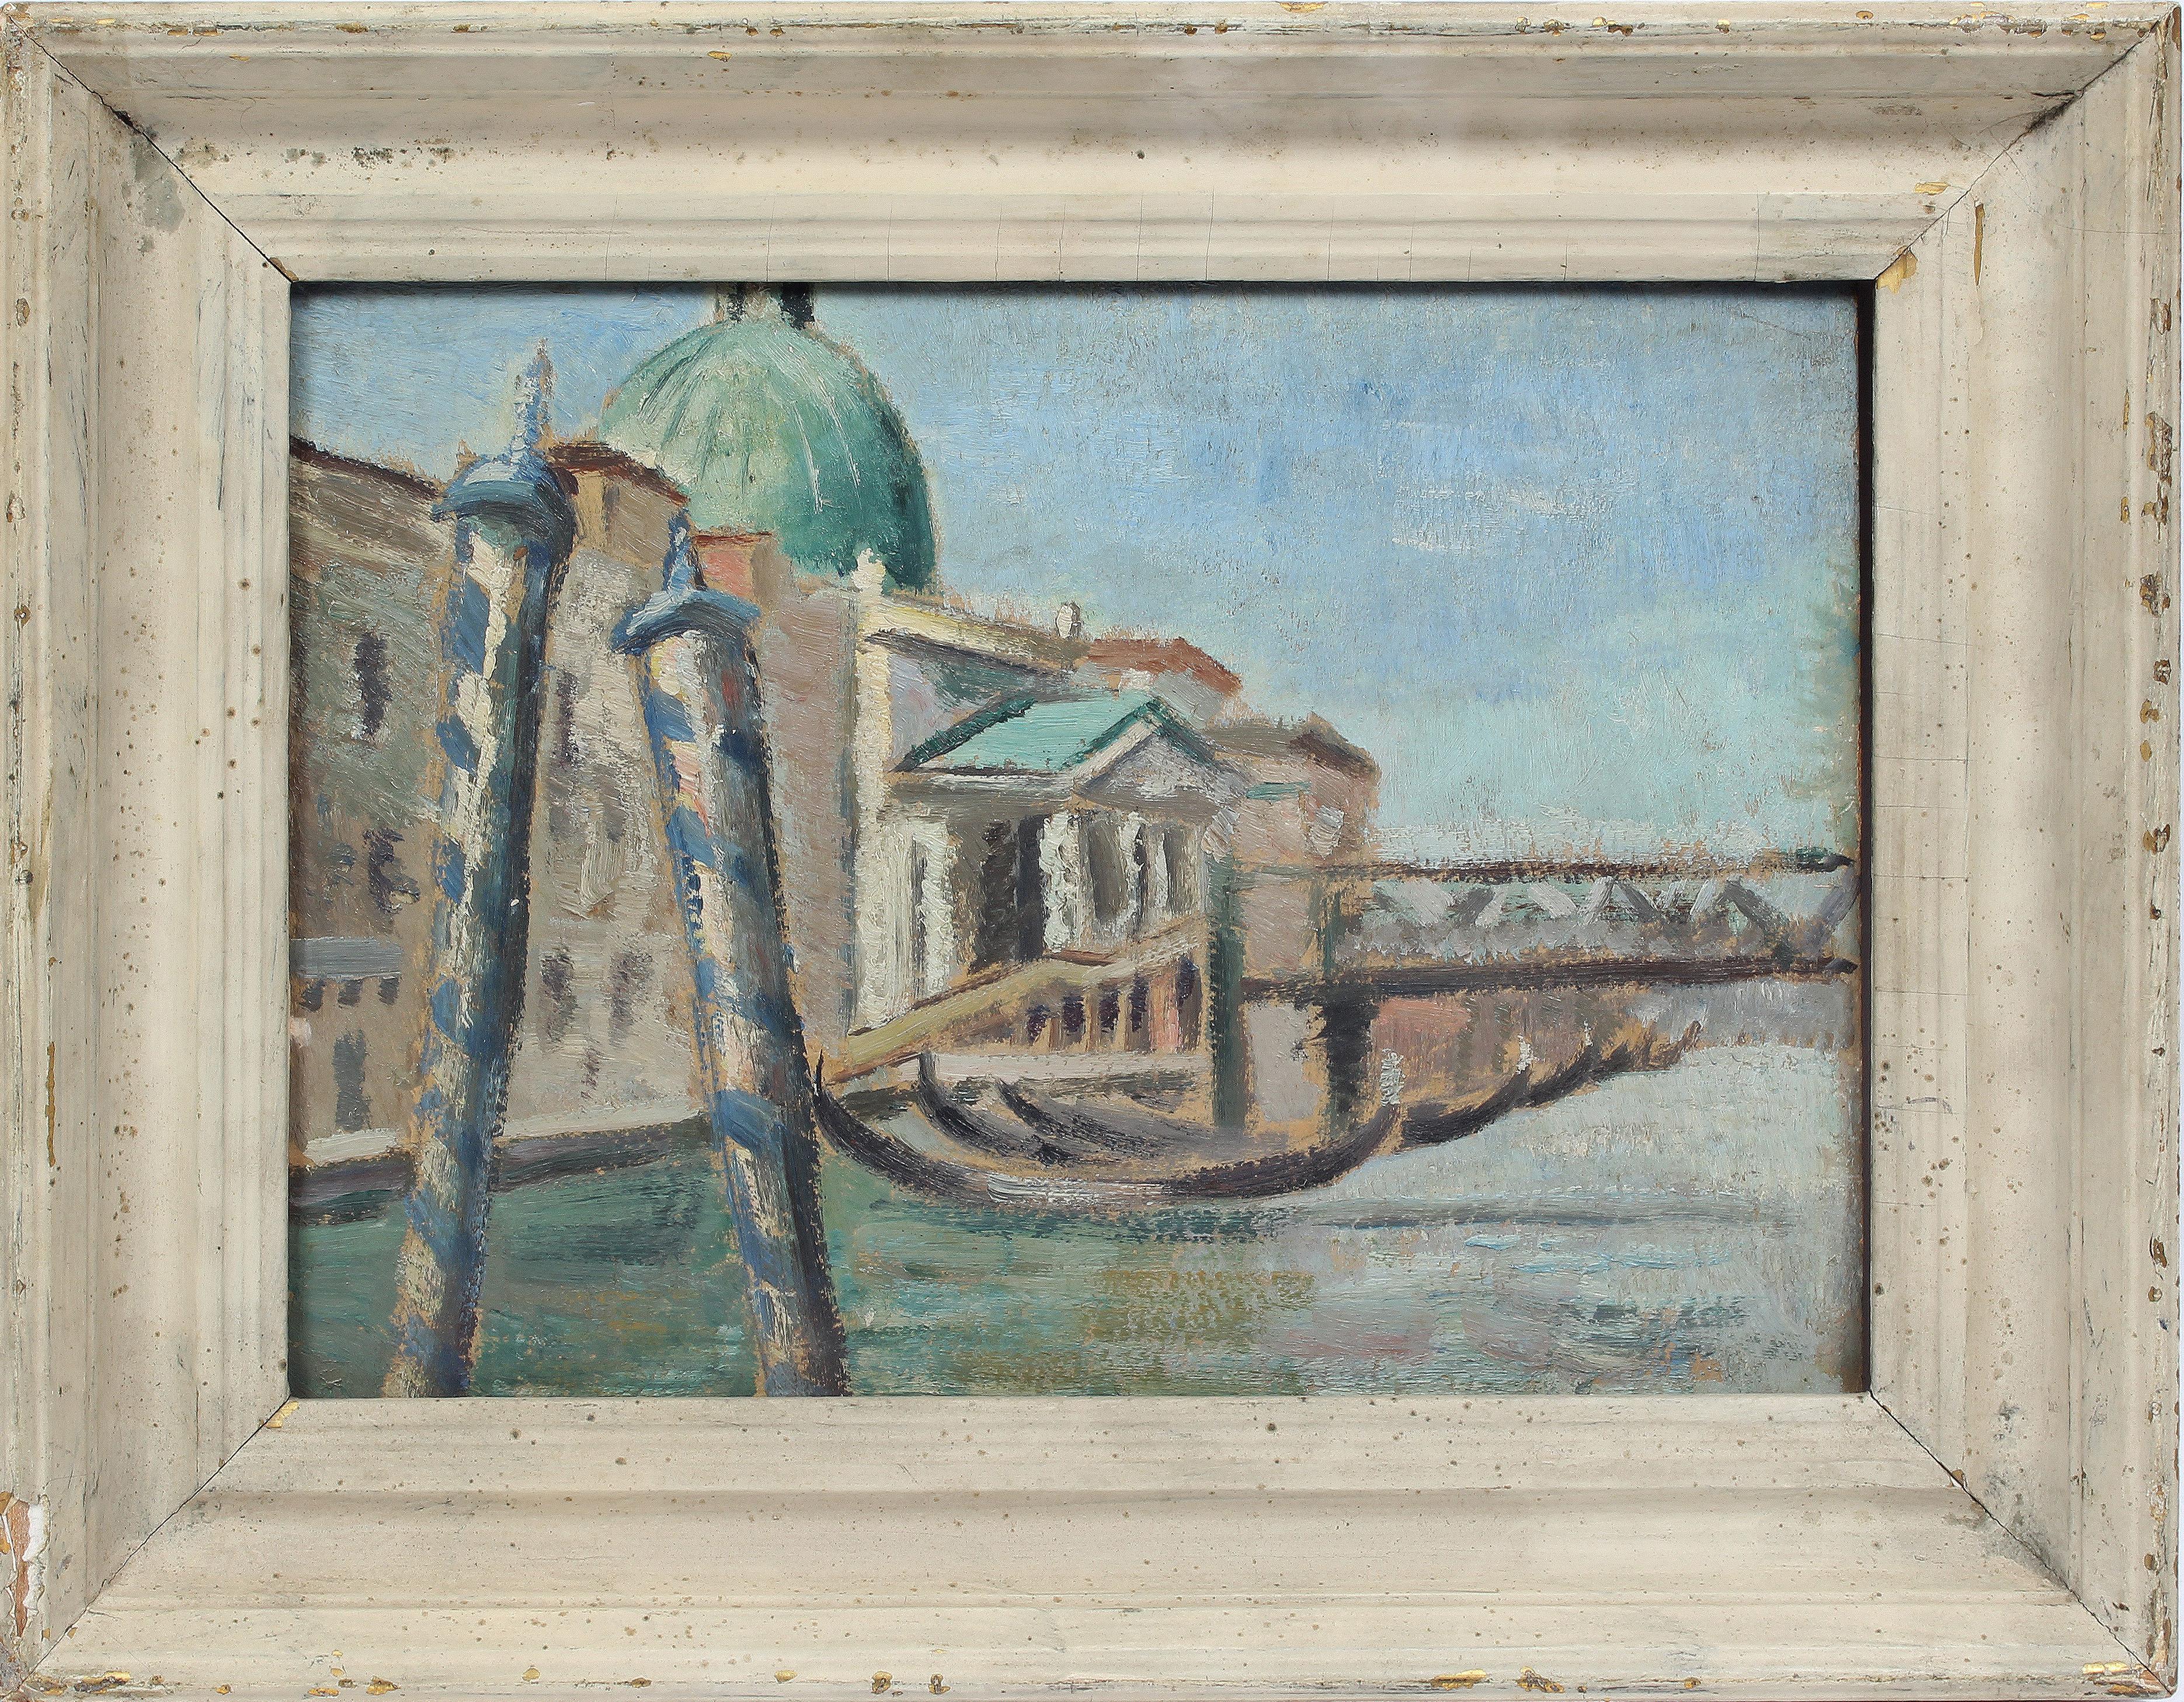 Anthony (Tony) J. Sisti Landscape Painting - Antique American Impressionist Venice Italy Original CItyscape  Oil Painting